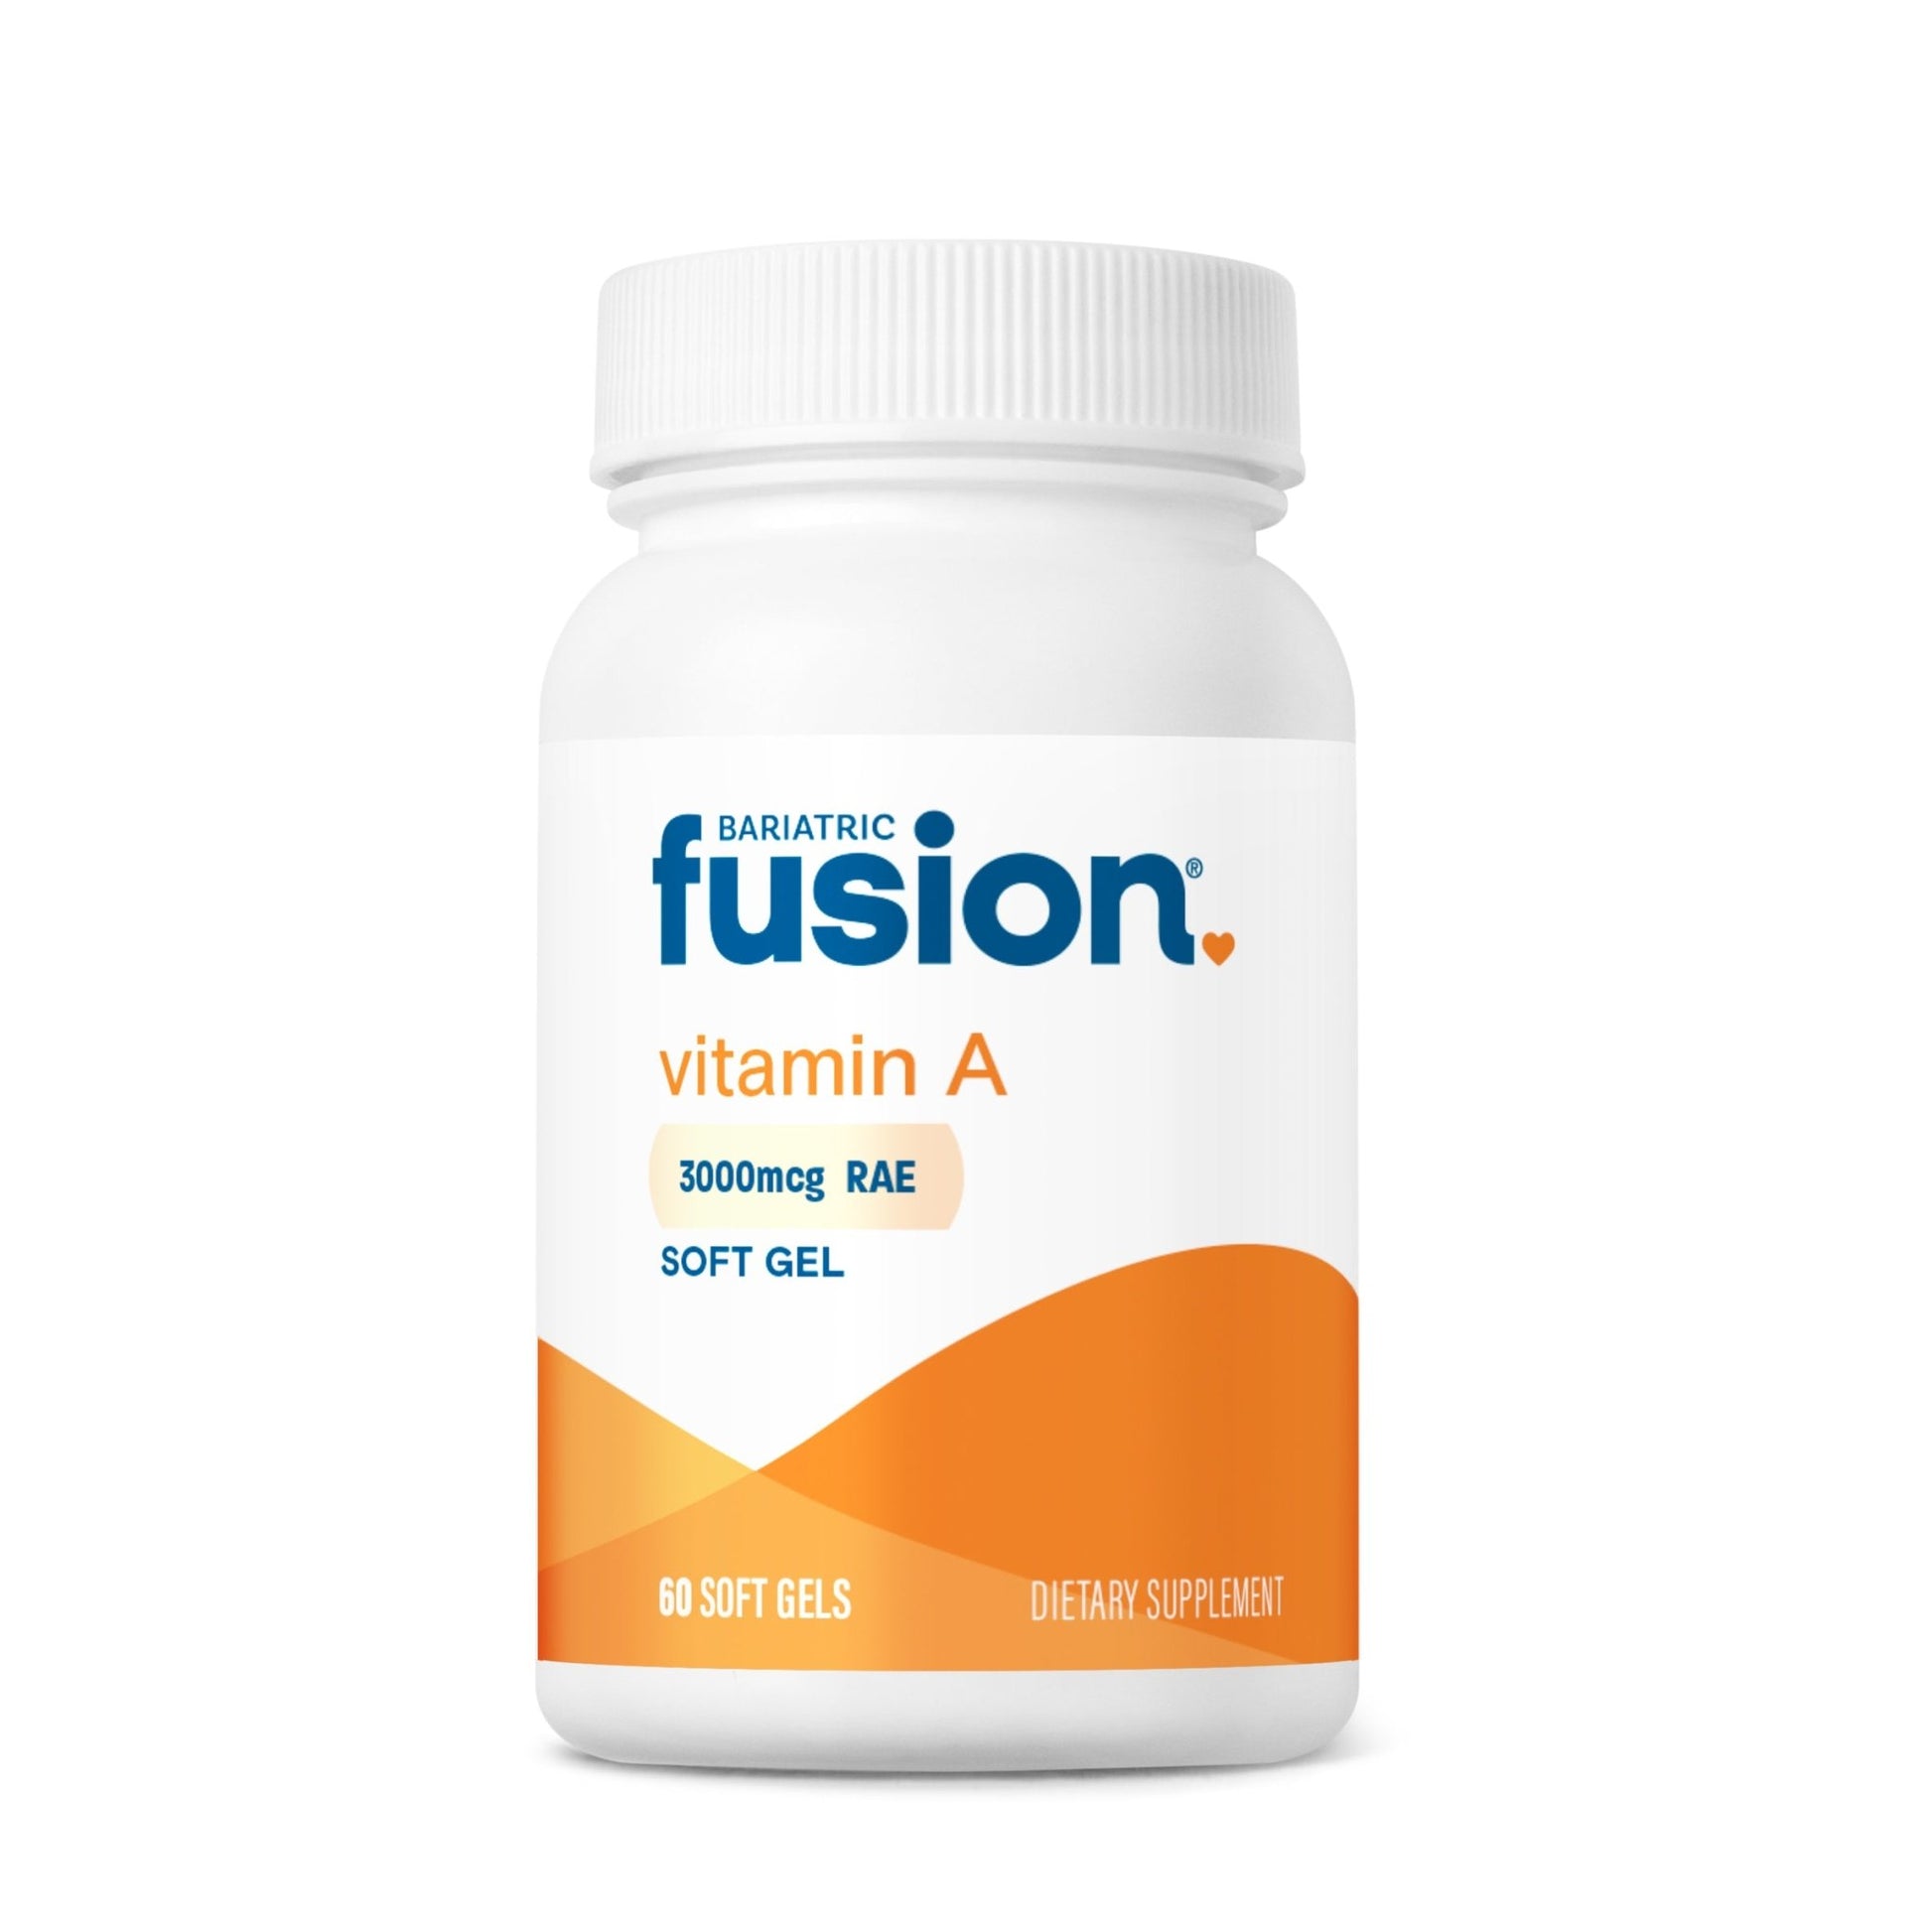 Bariatric Fusion Vitamin A Softgel - 60 count.